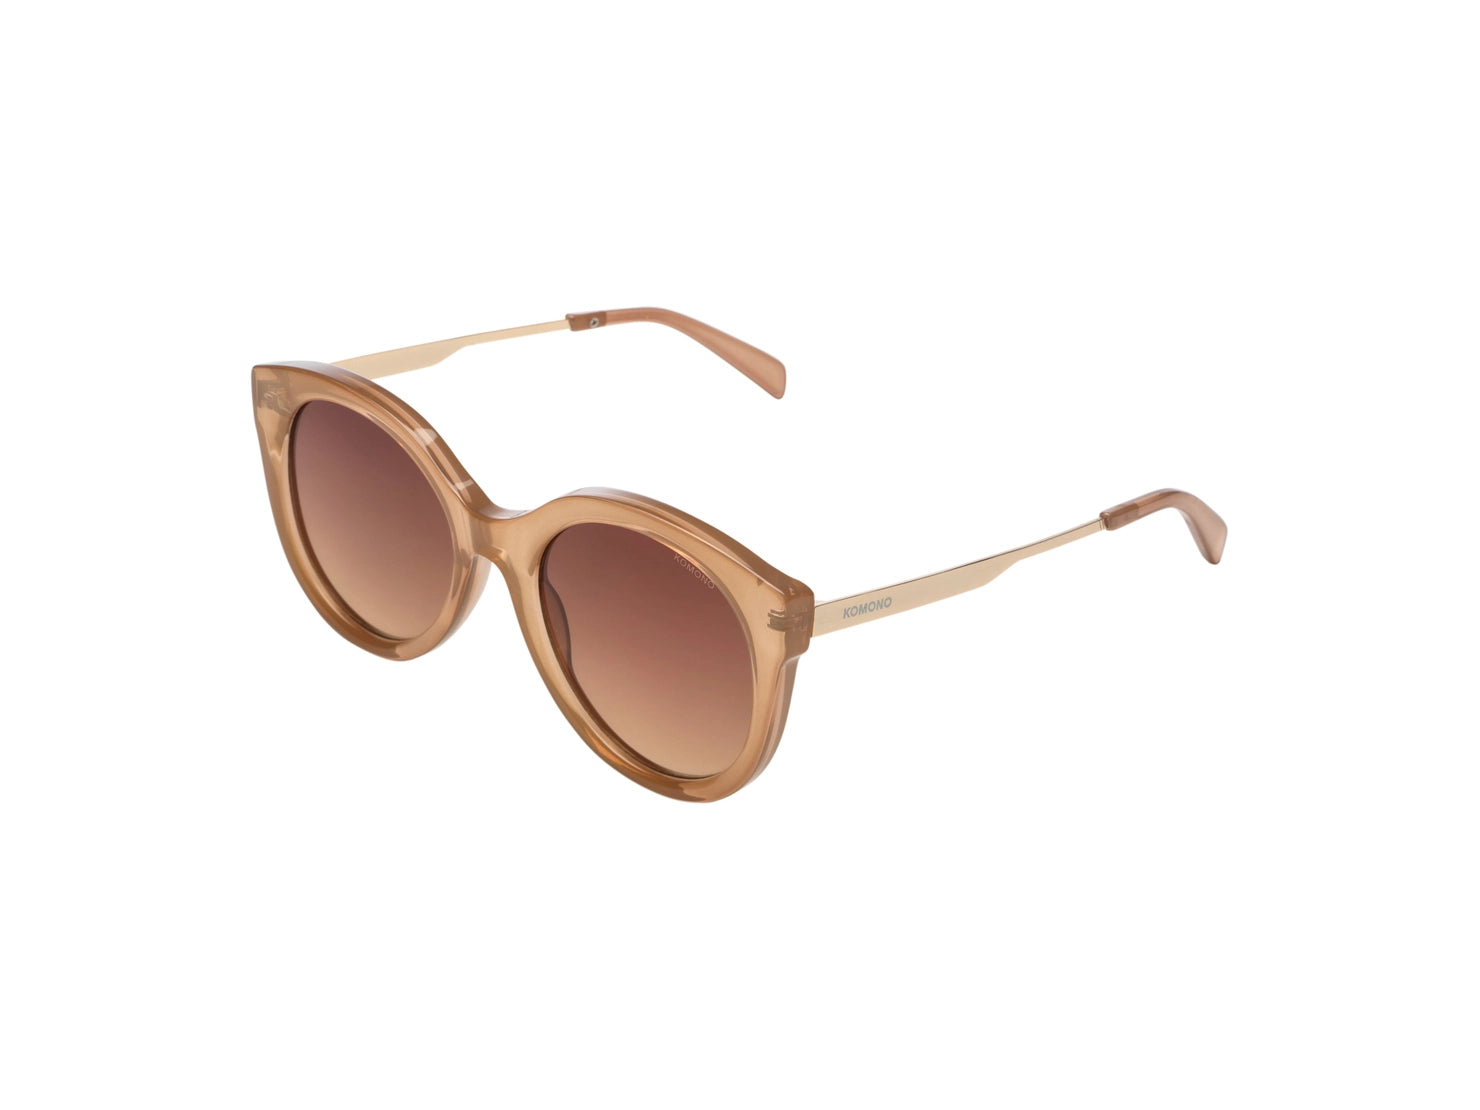 The Ellis Sahara White Gold Sunglasses by Komono